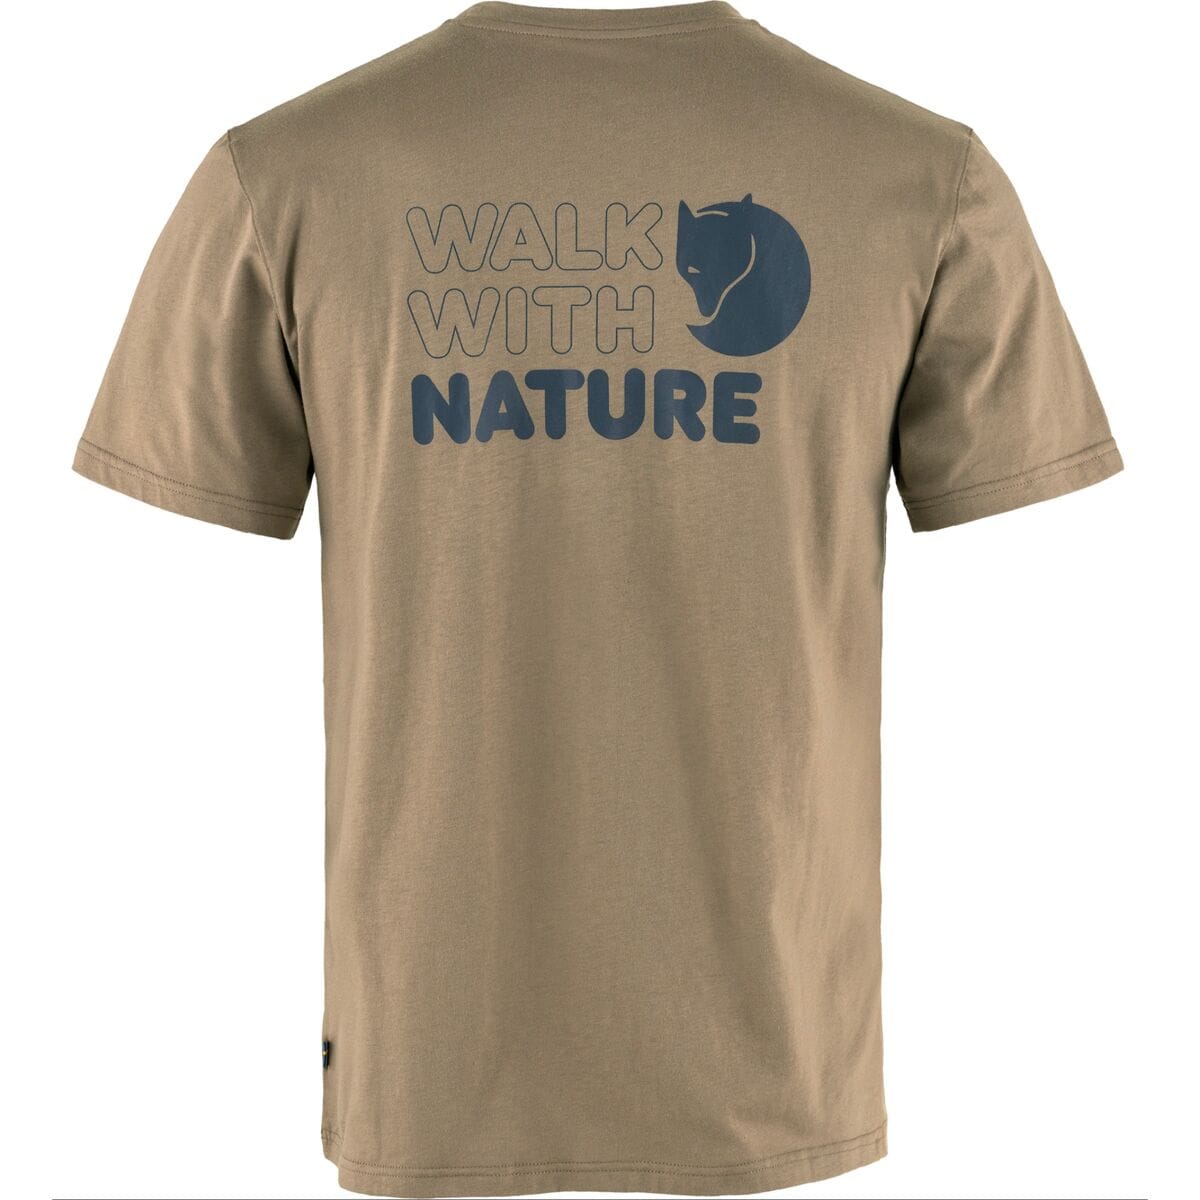 Walk With Nature T-Shirt - Men